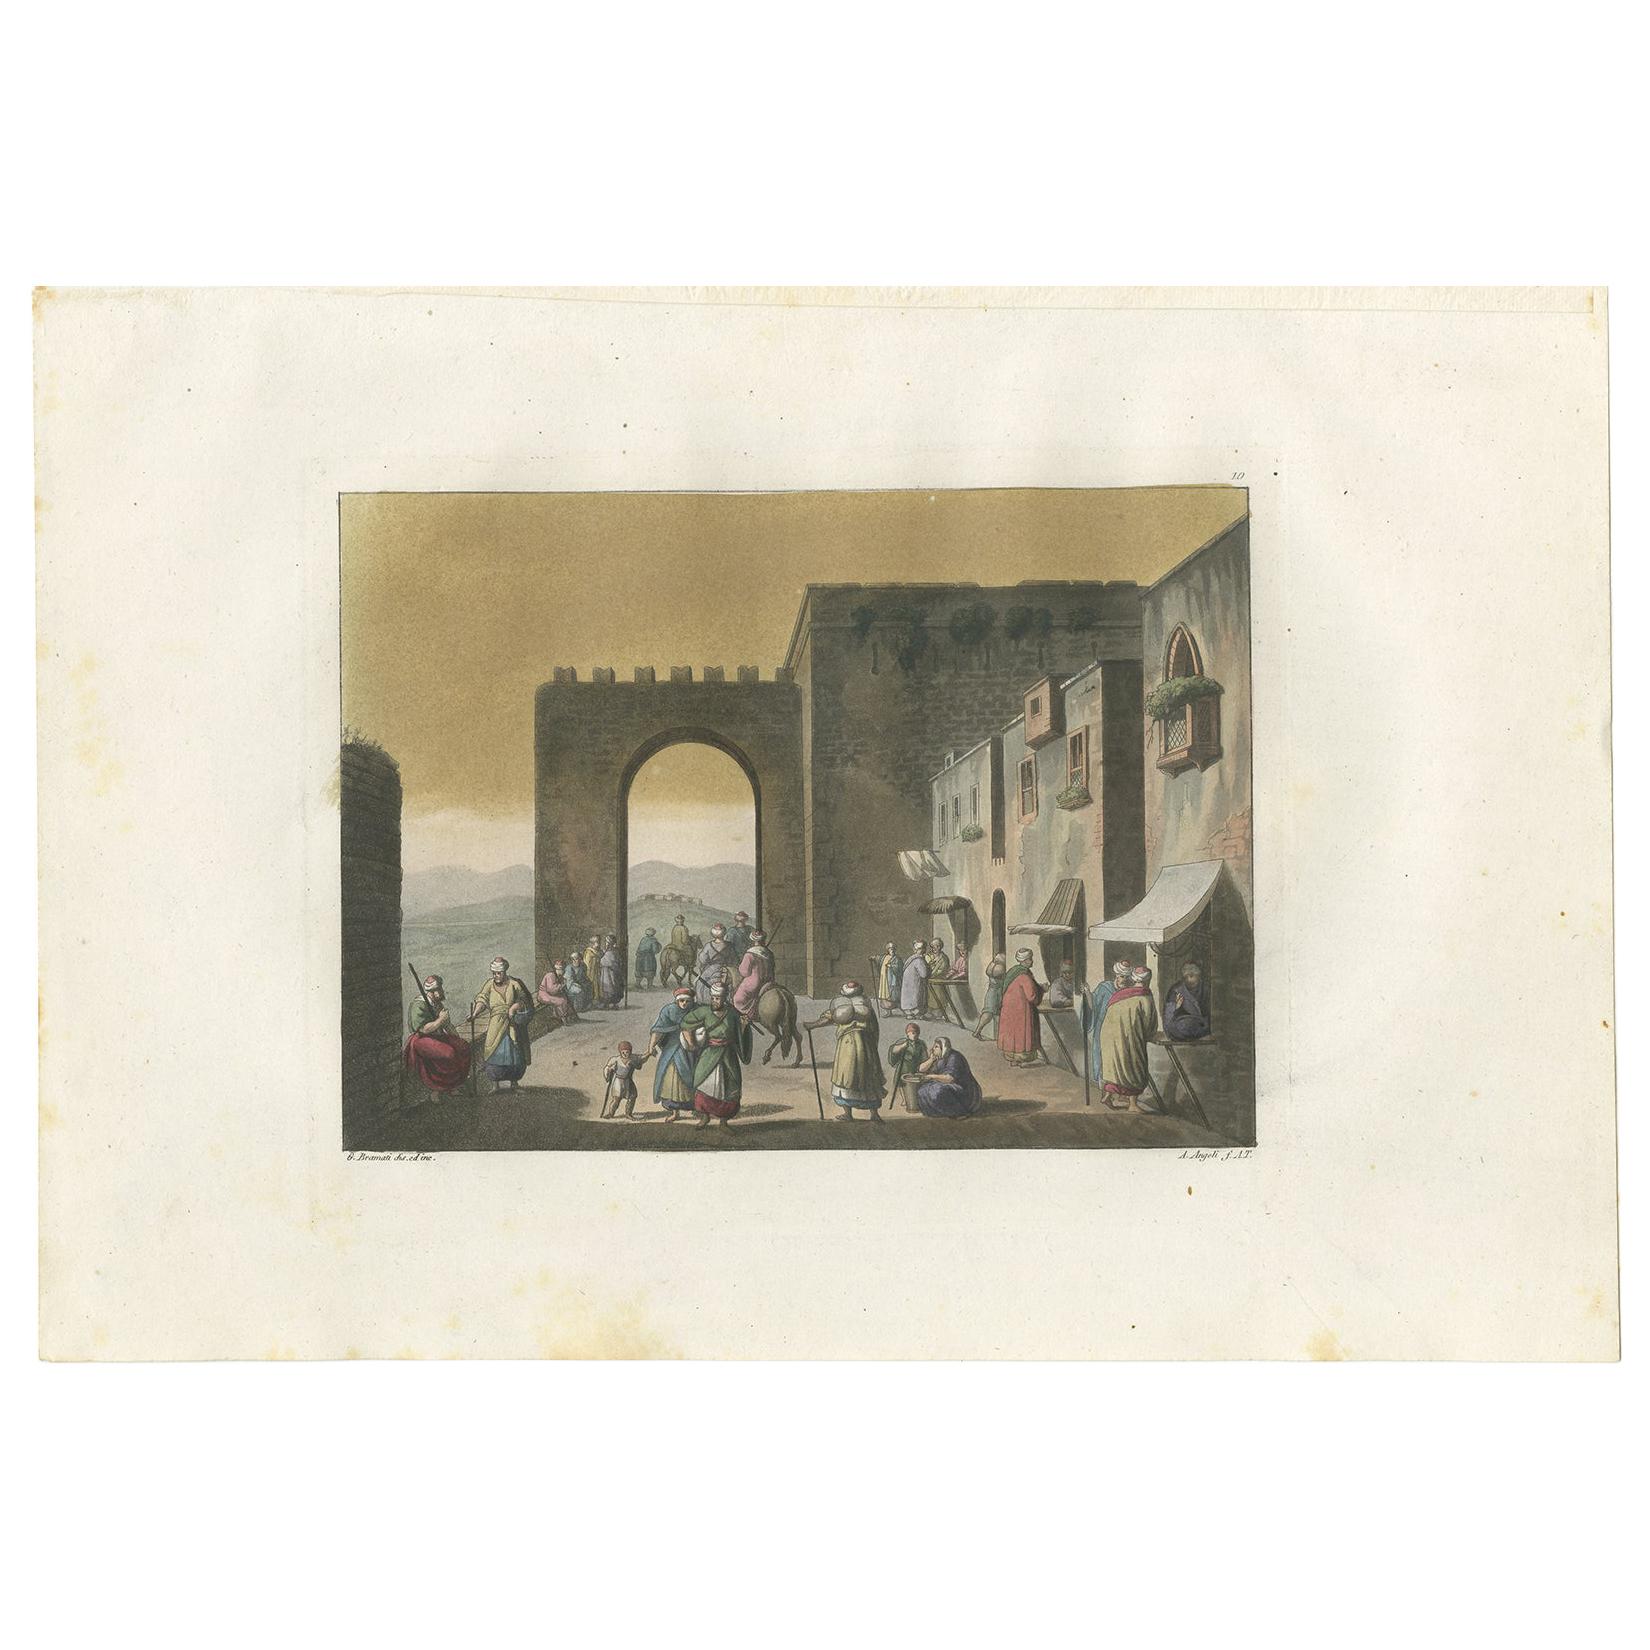 Antique Print of the Main Street of Bethlehem by Ferrario, '1831'